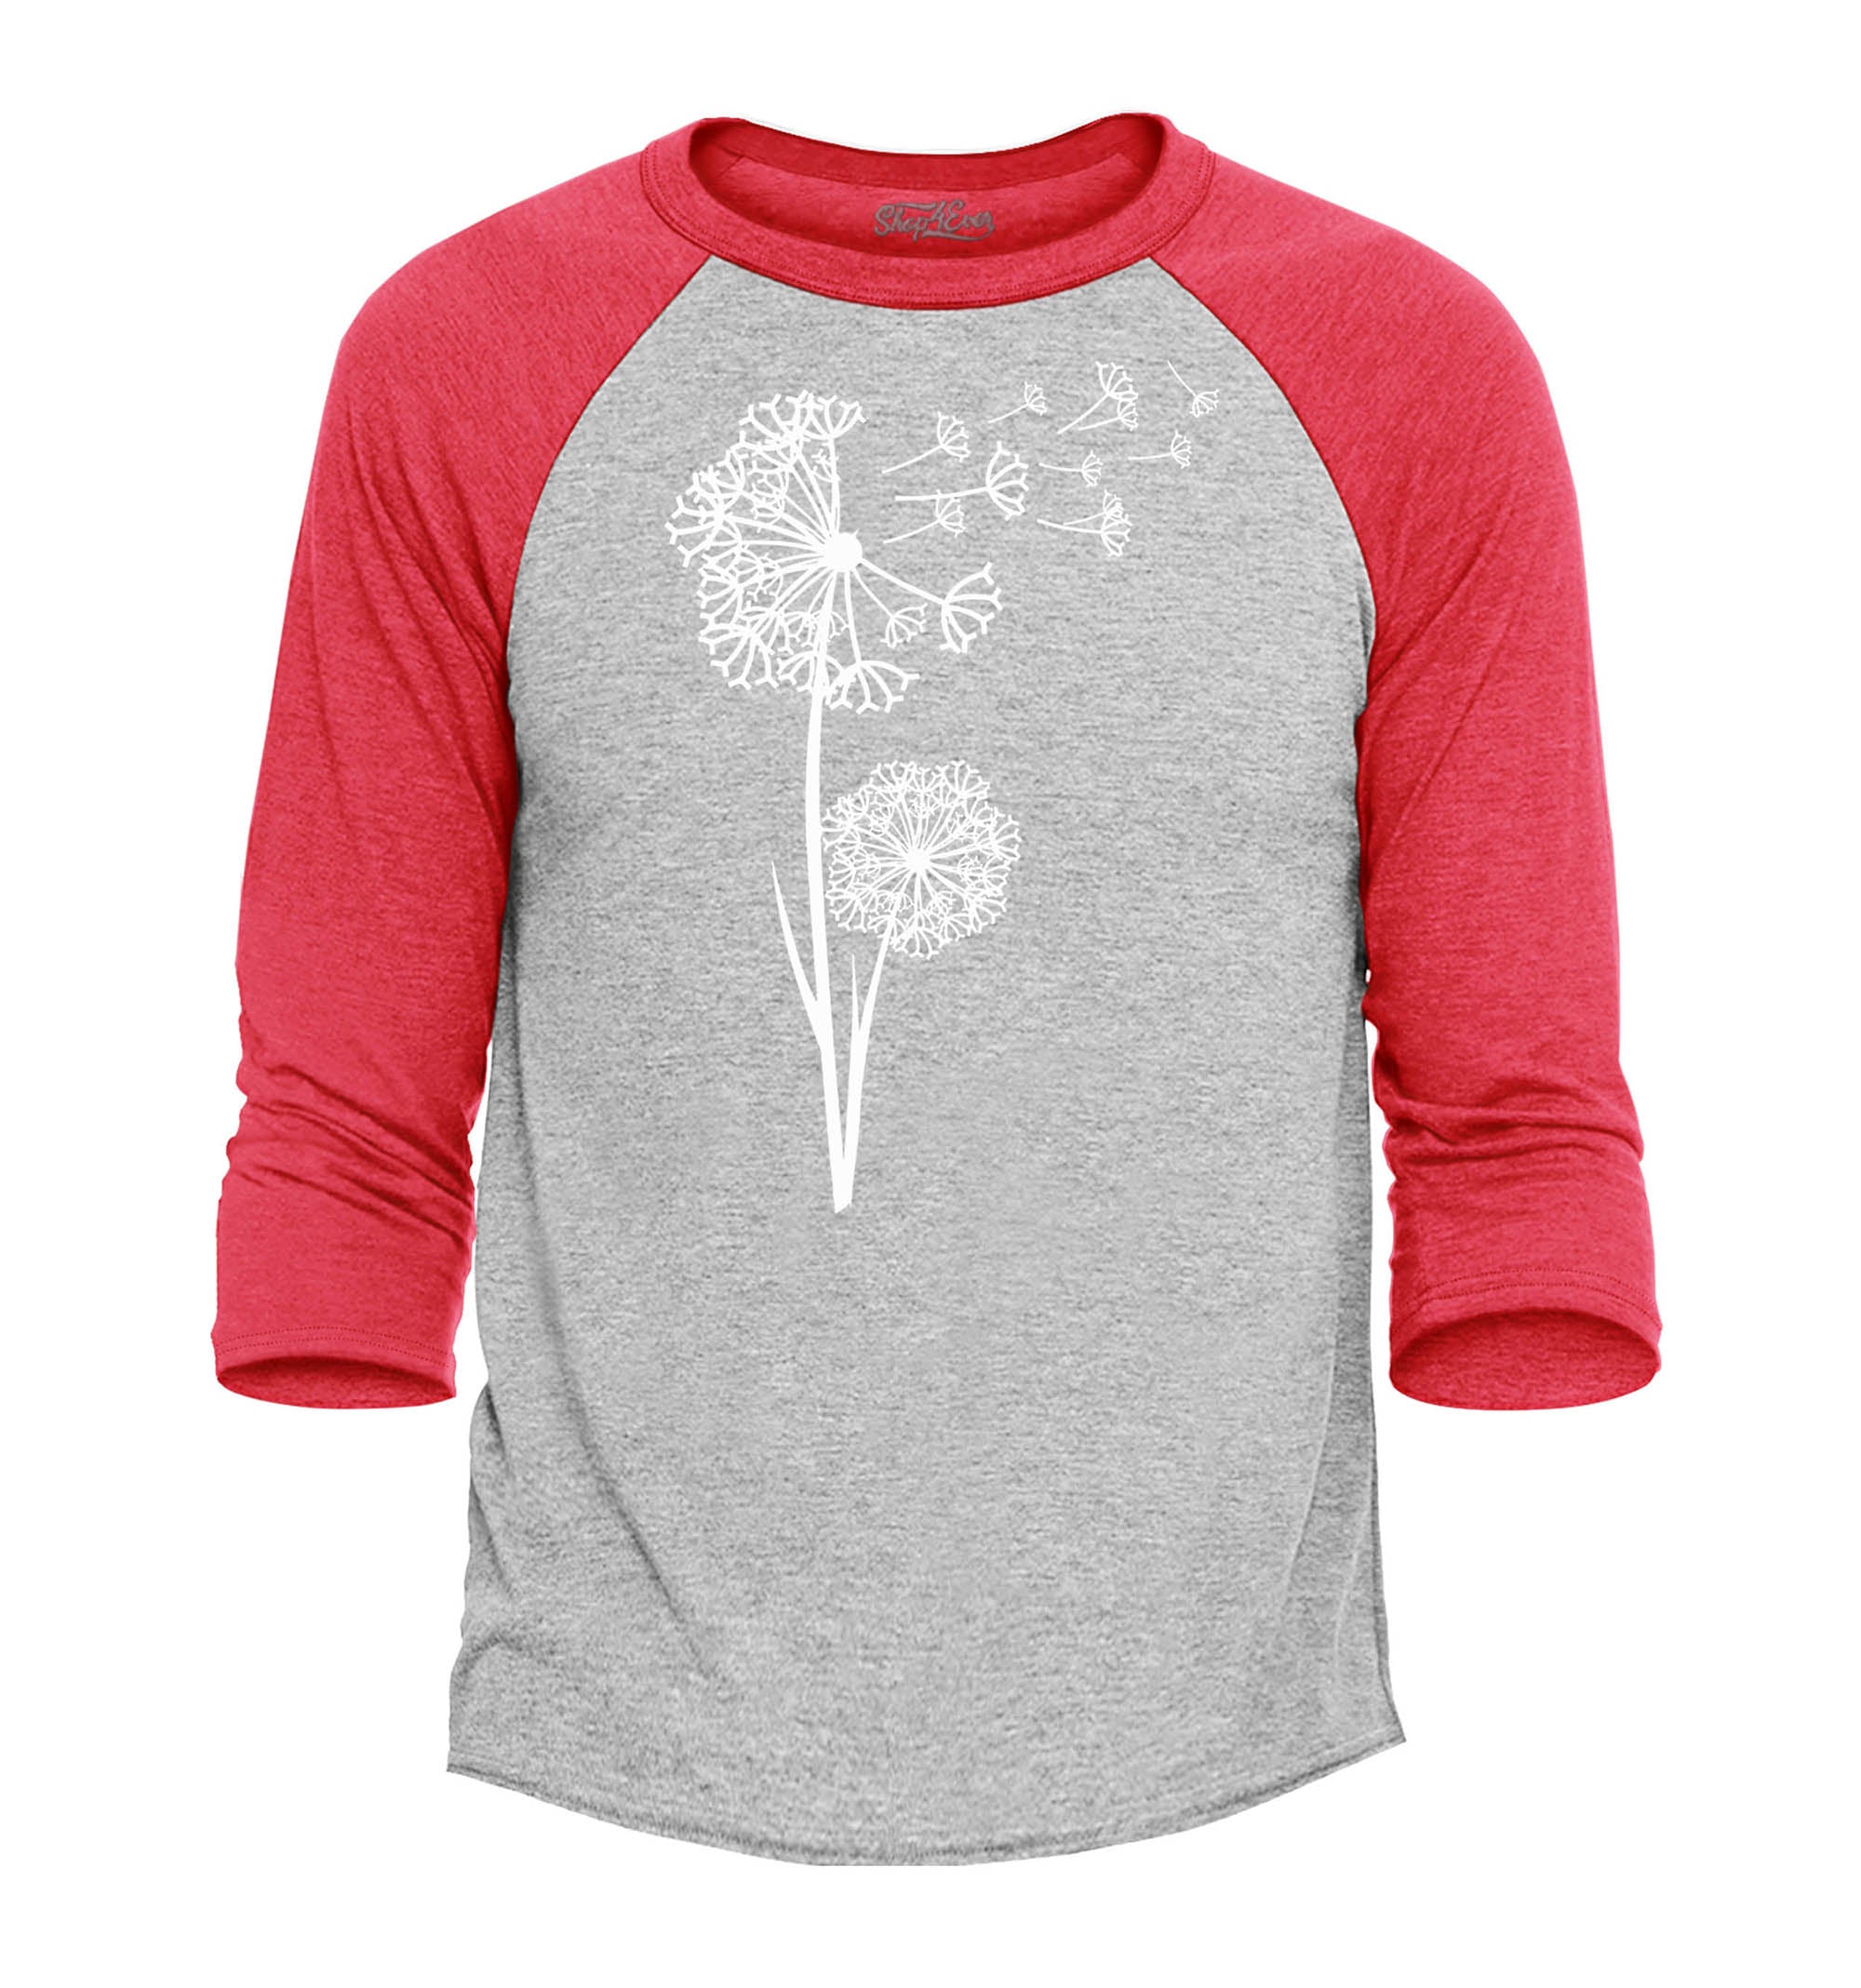 Dandelion Blowing Wish Flower Wildflowers Raglan Baseball Shirt